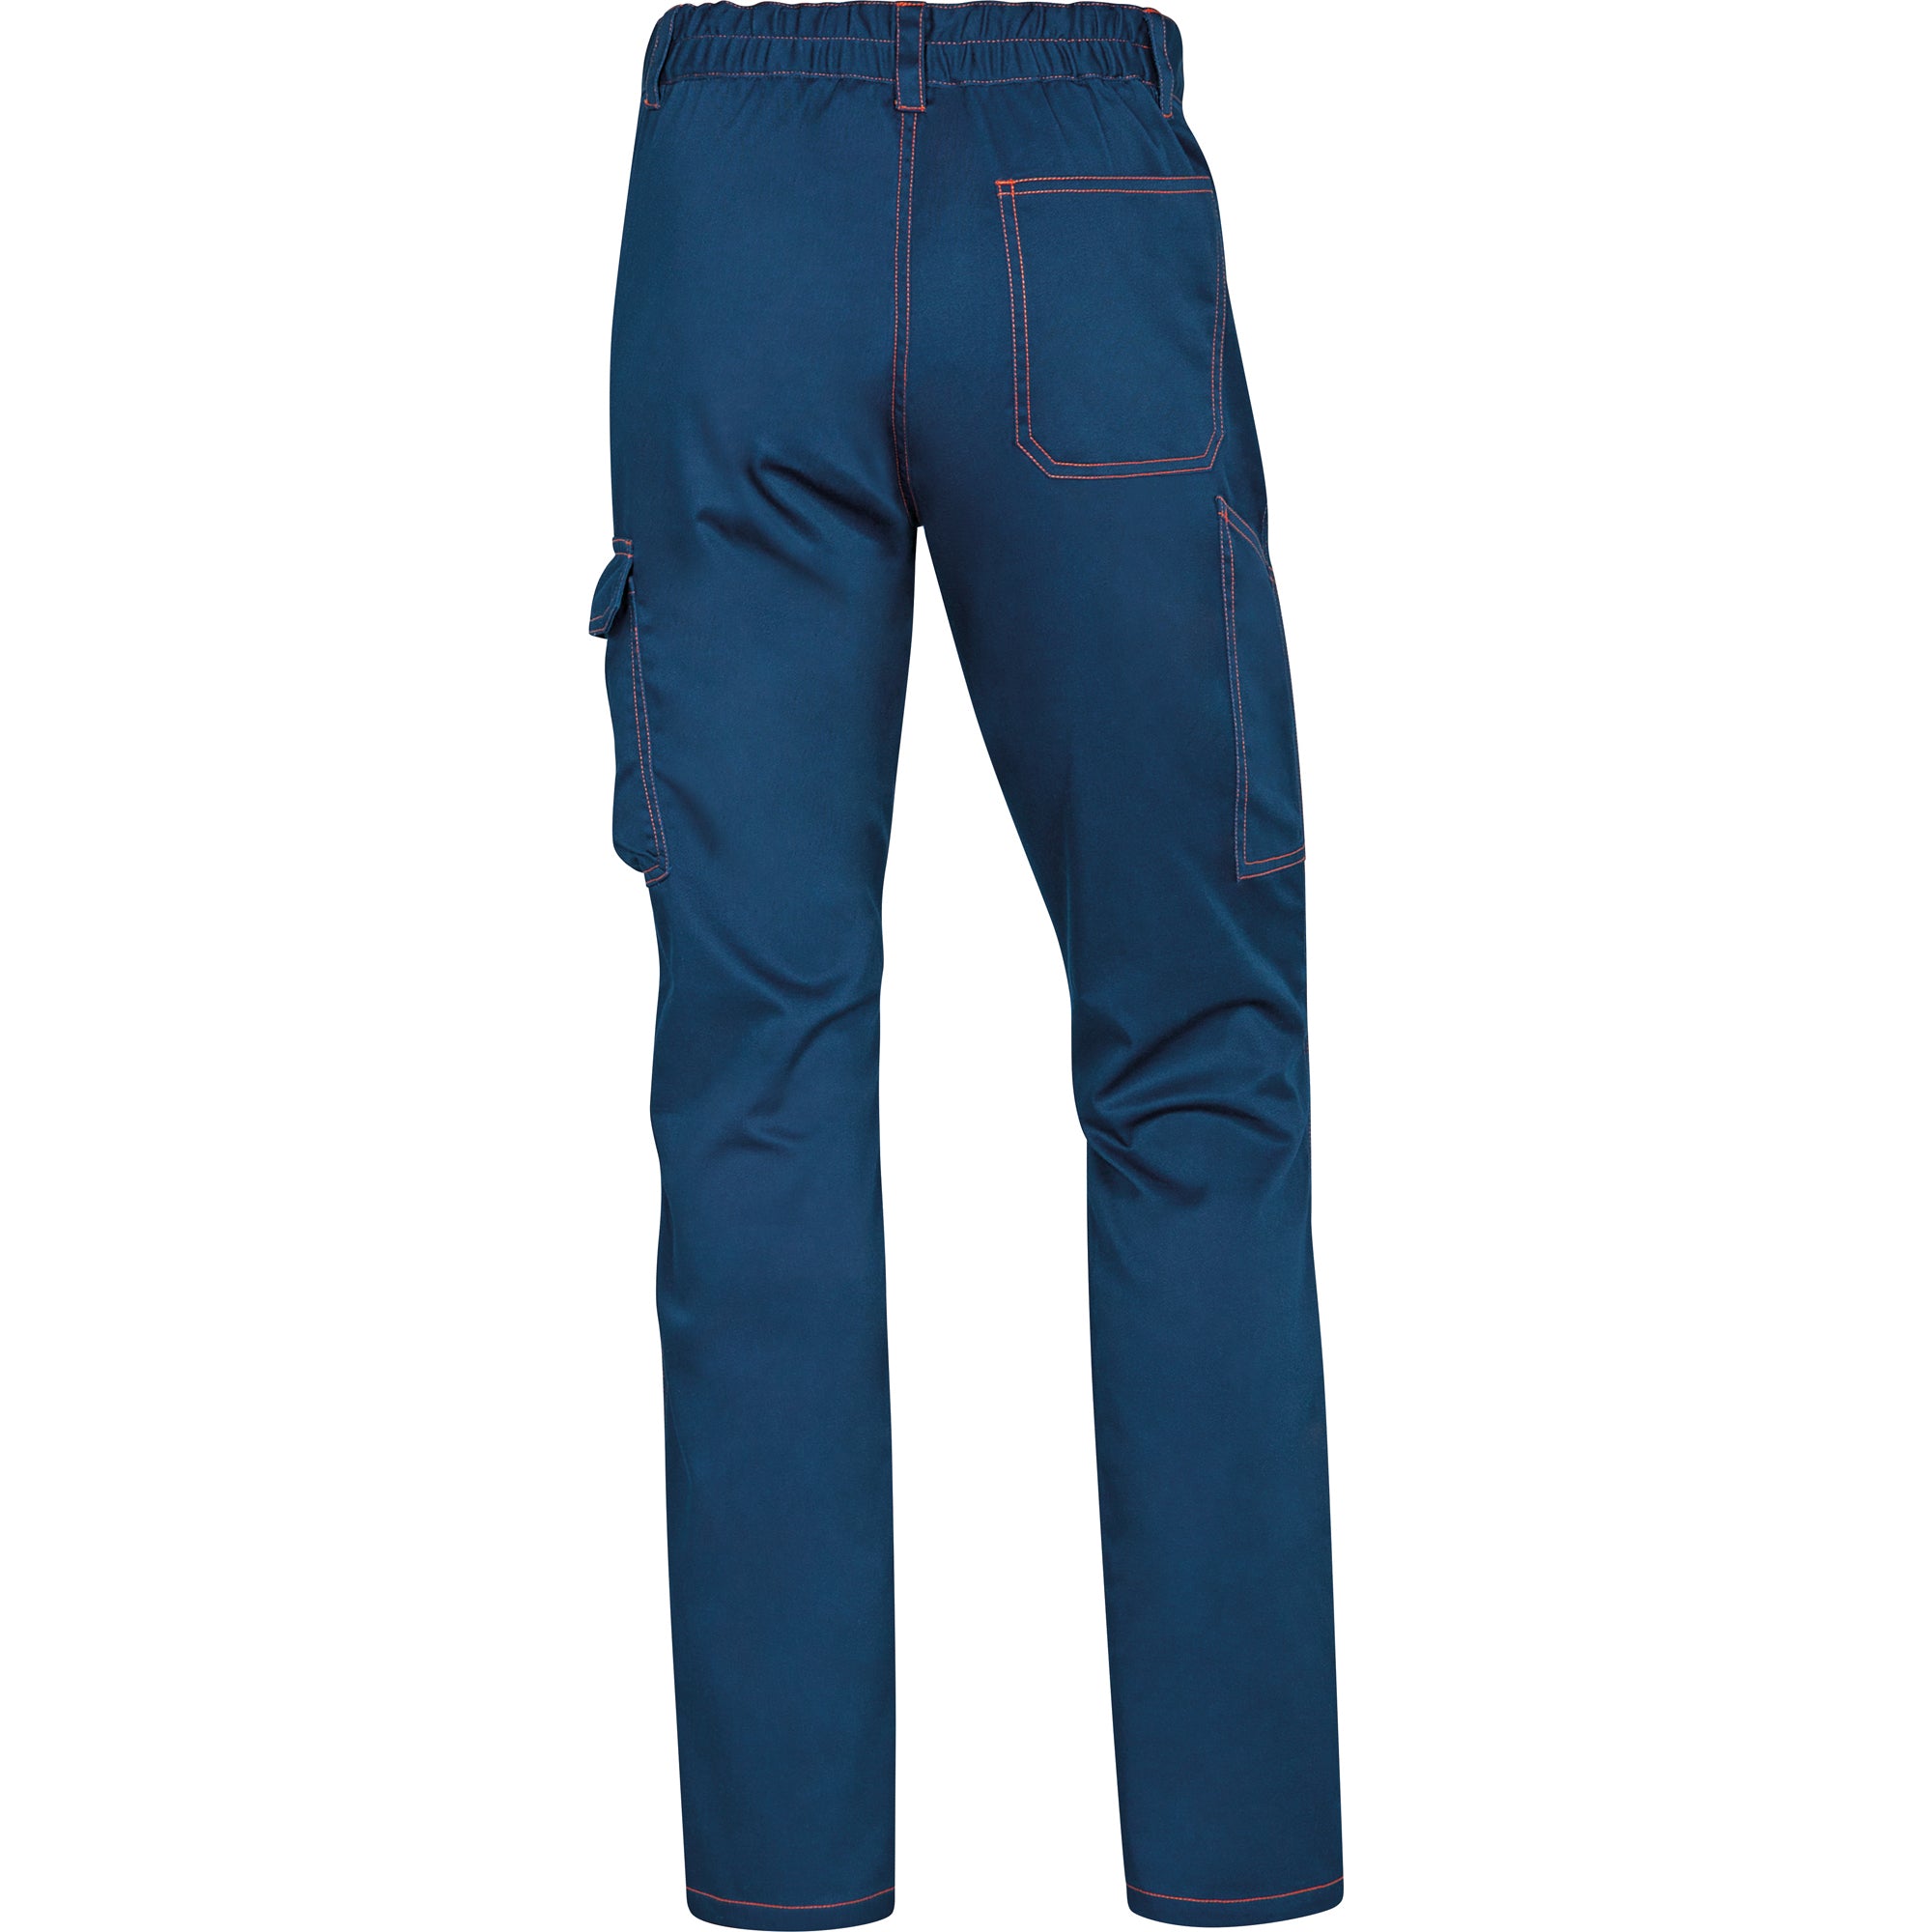 deltaplus-pantalone-lavoro-panostrpa-tg-xl-blu-arancio